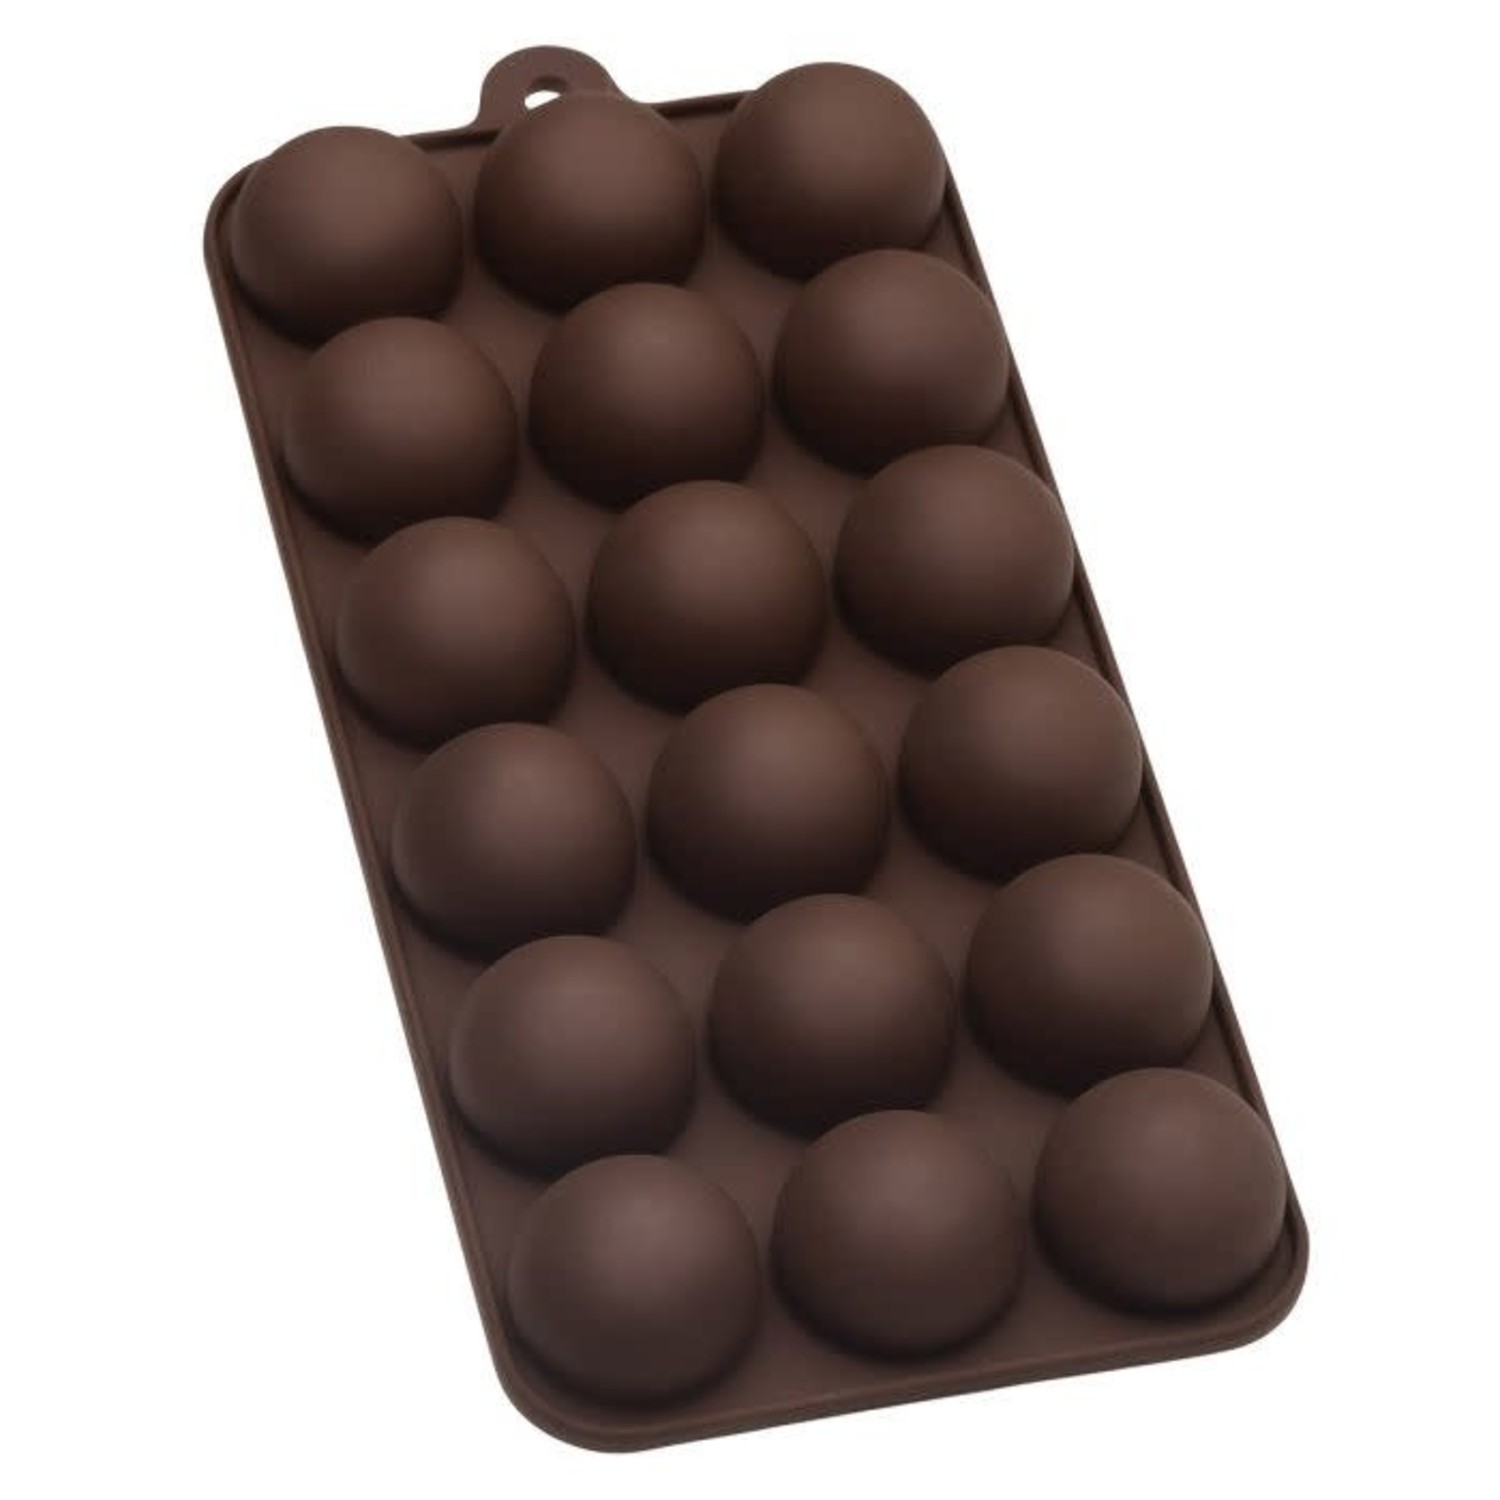 https://cdn.shoplightspeed.com/shops/633447/files/52141951/1500x4000x3/silicone-chocolate-truffle-mold.jpg